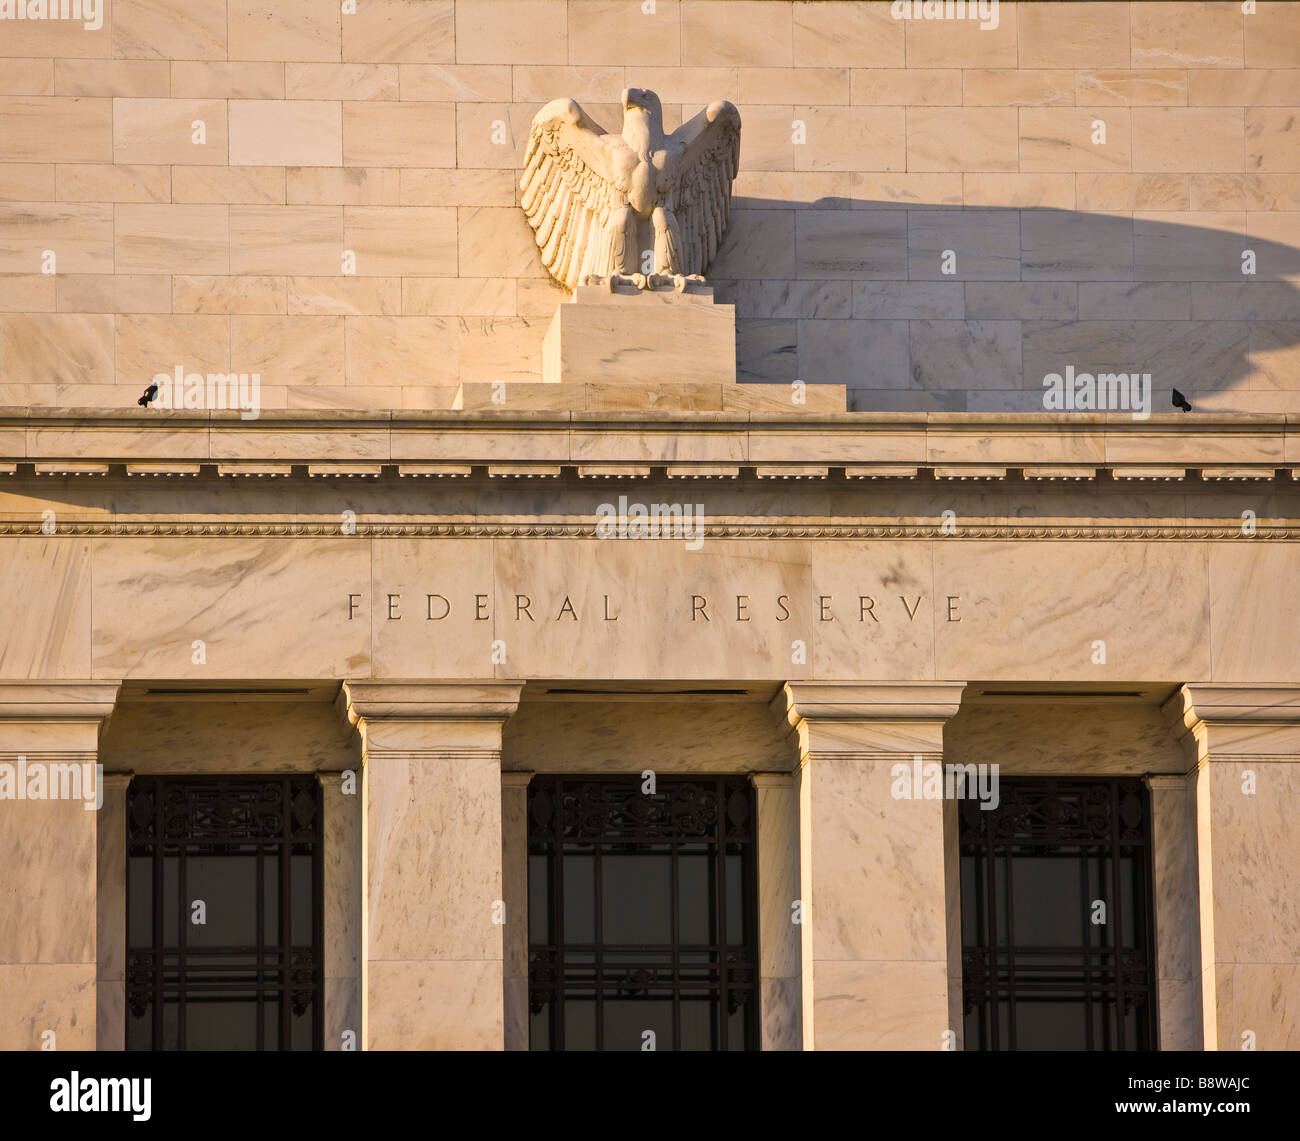 WASHINGTON DC USA United States Federal Reserve Bank building Stock Photo